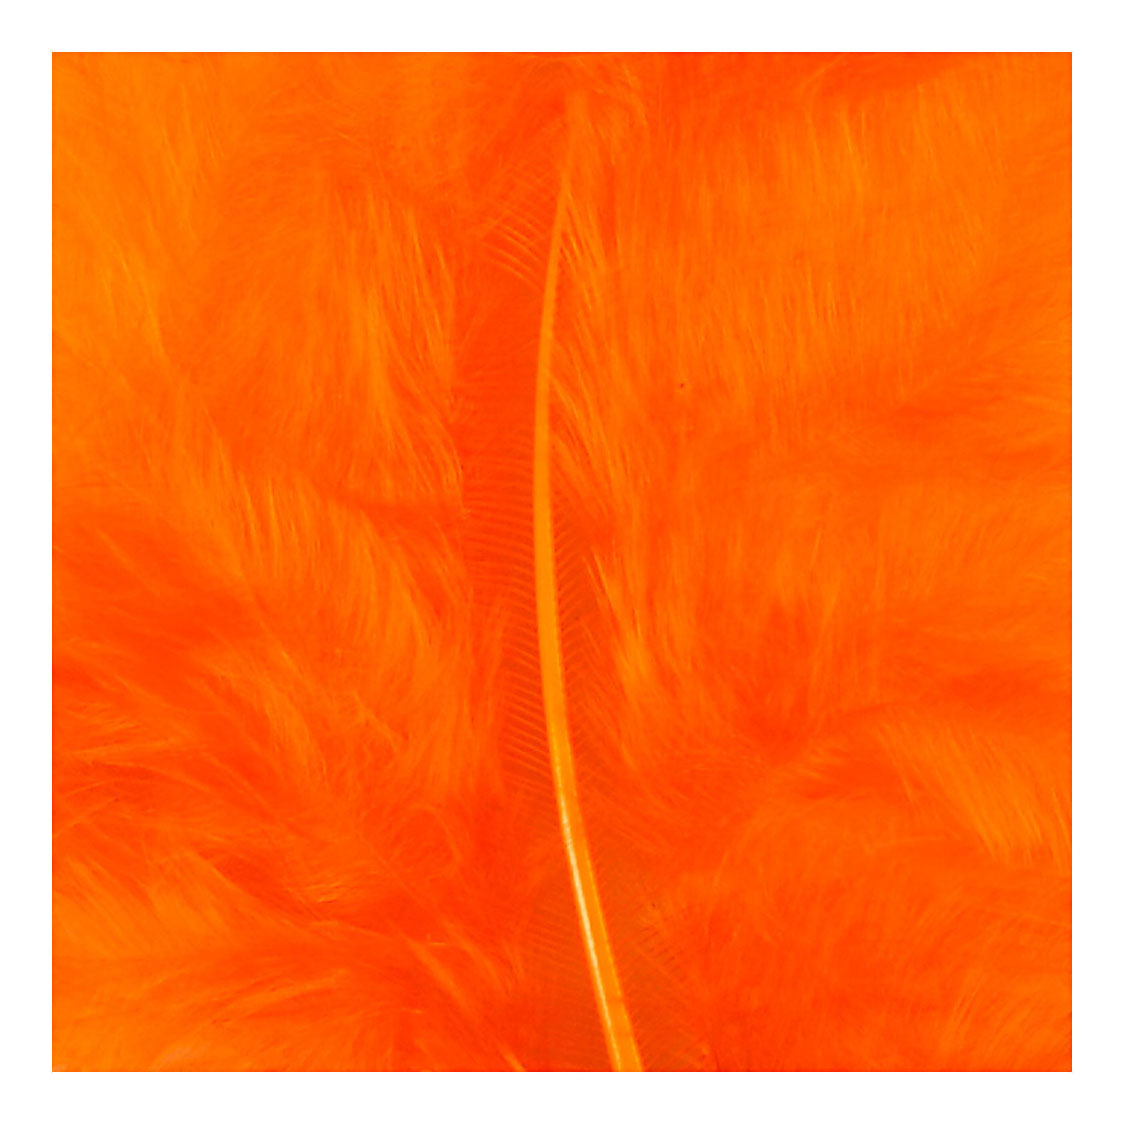 Daunen Orange 5-12 cm, 15 Stk.